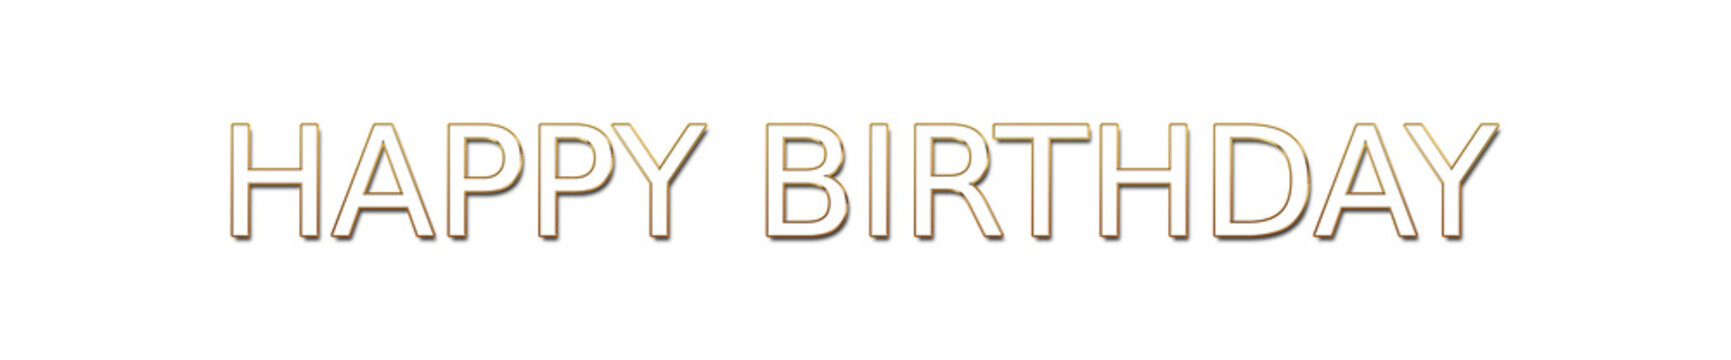 happy birthday golden typography banner on transparent background